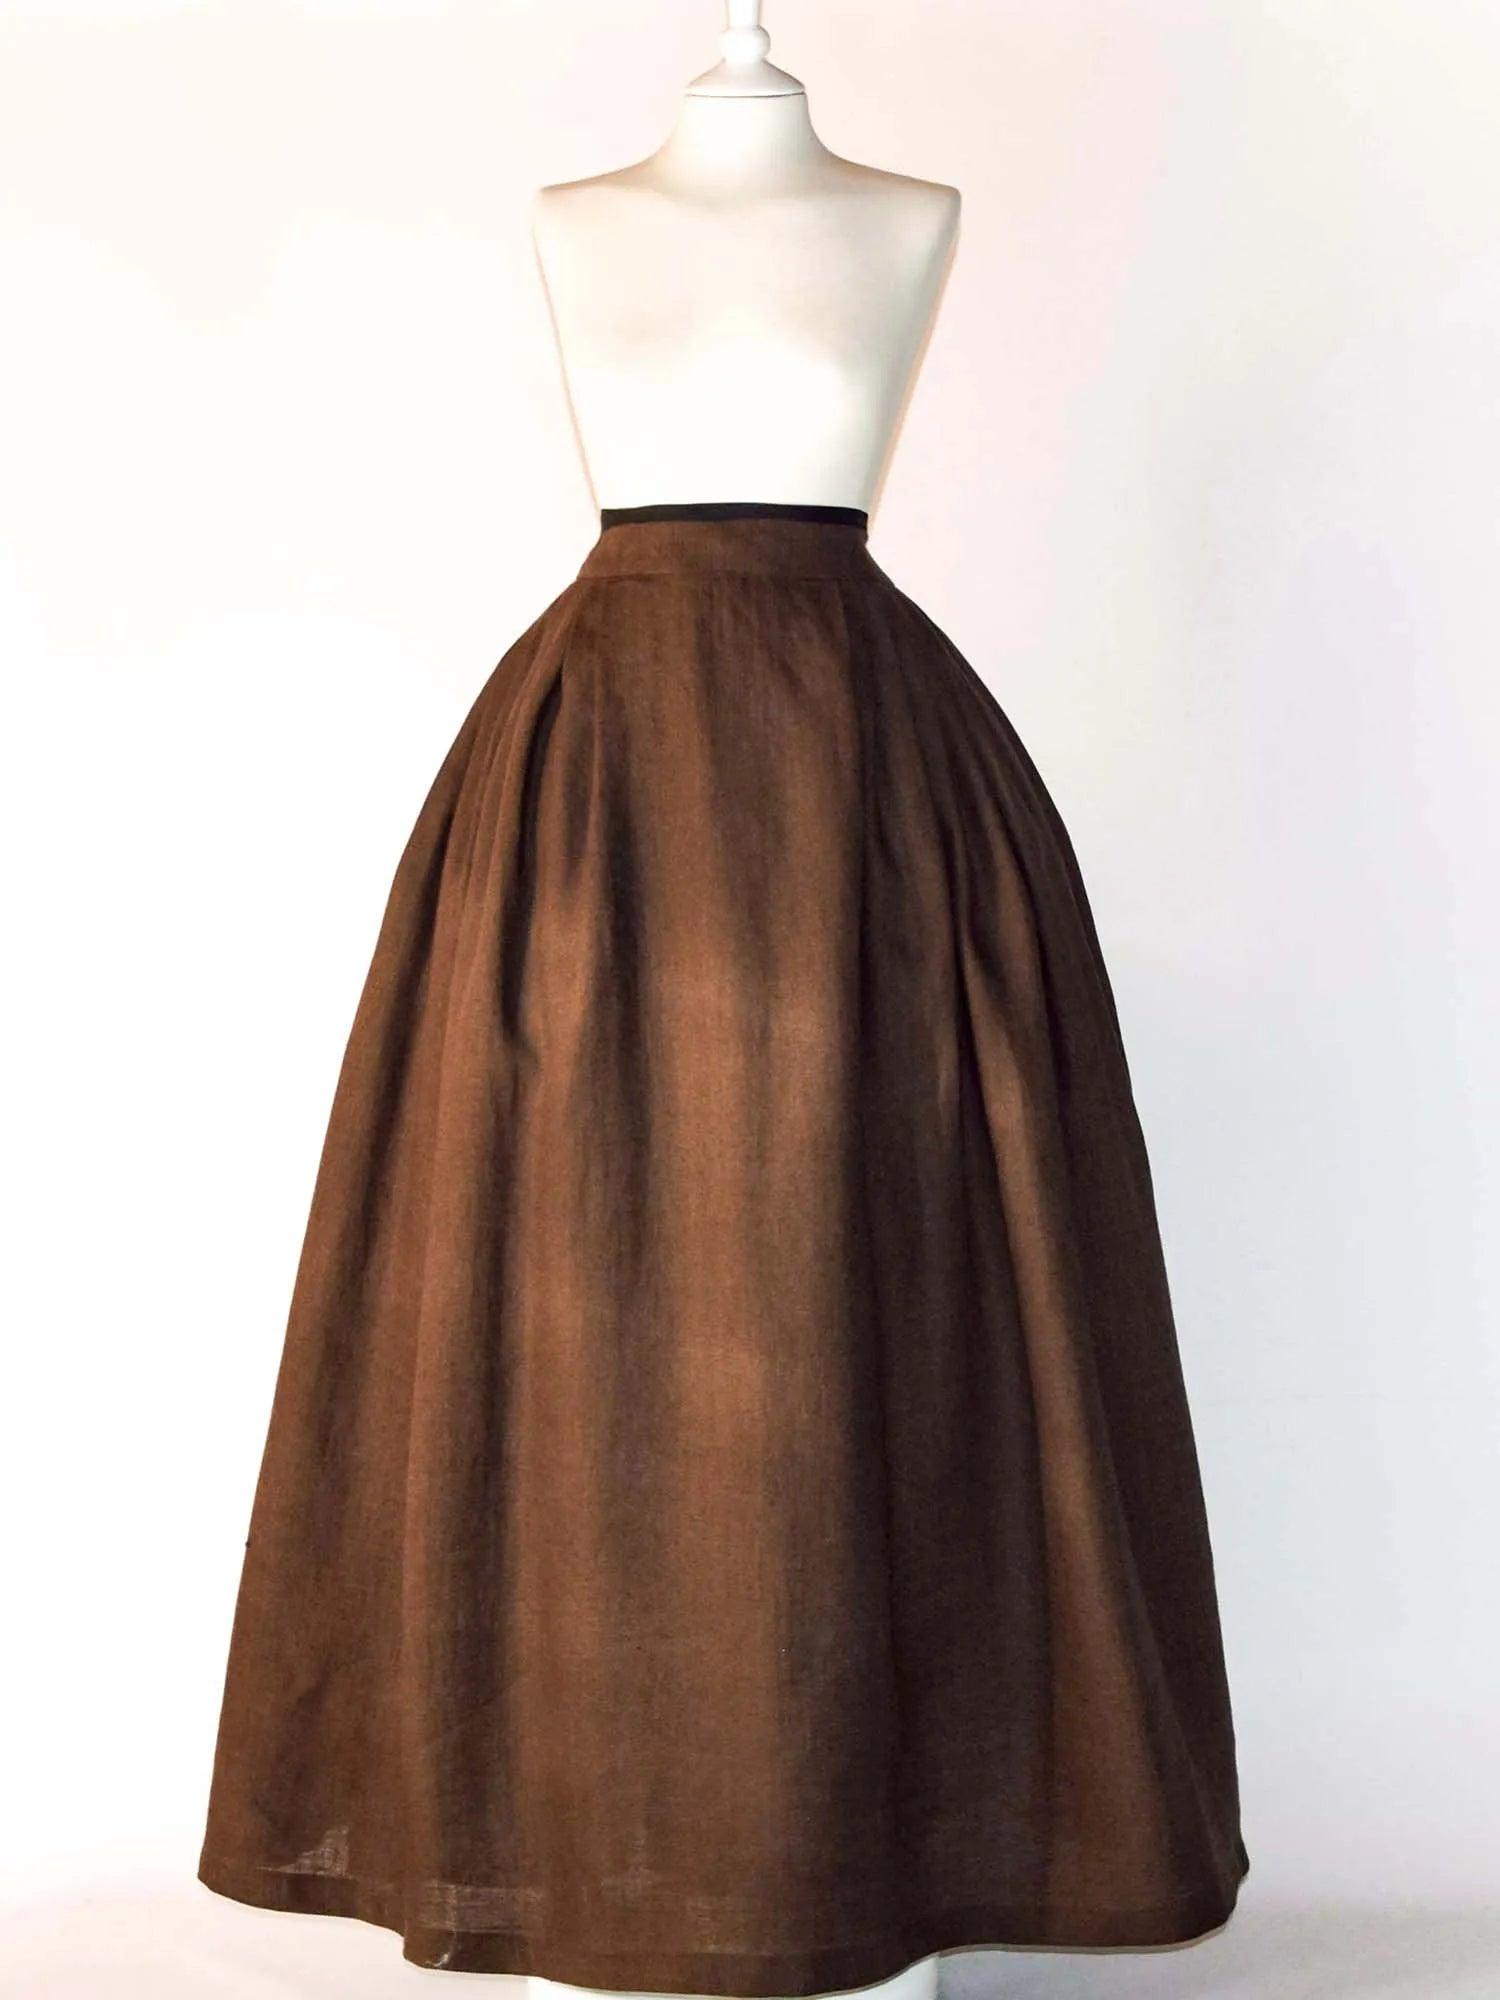 HELOISE, Historical Skirt in Chocolate Linen - Atelier Serraspina